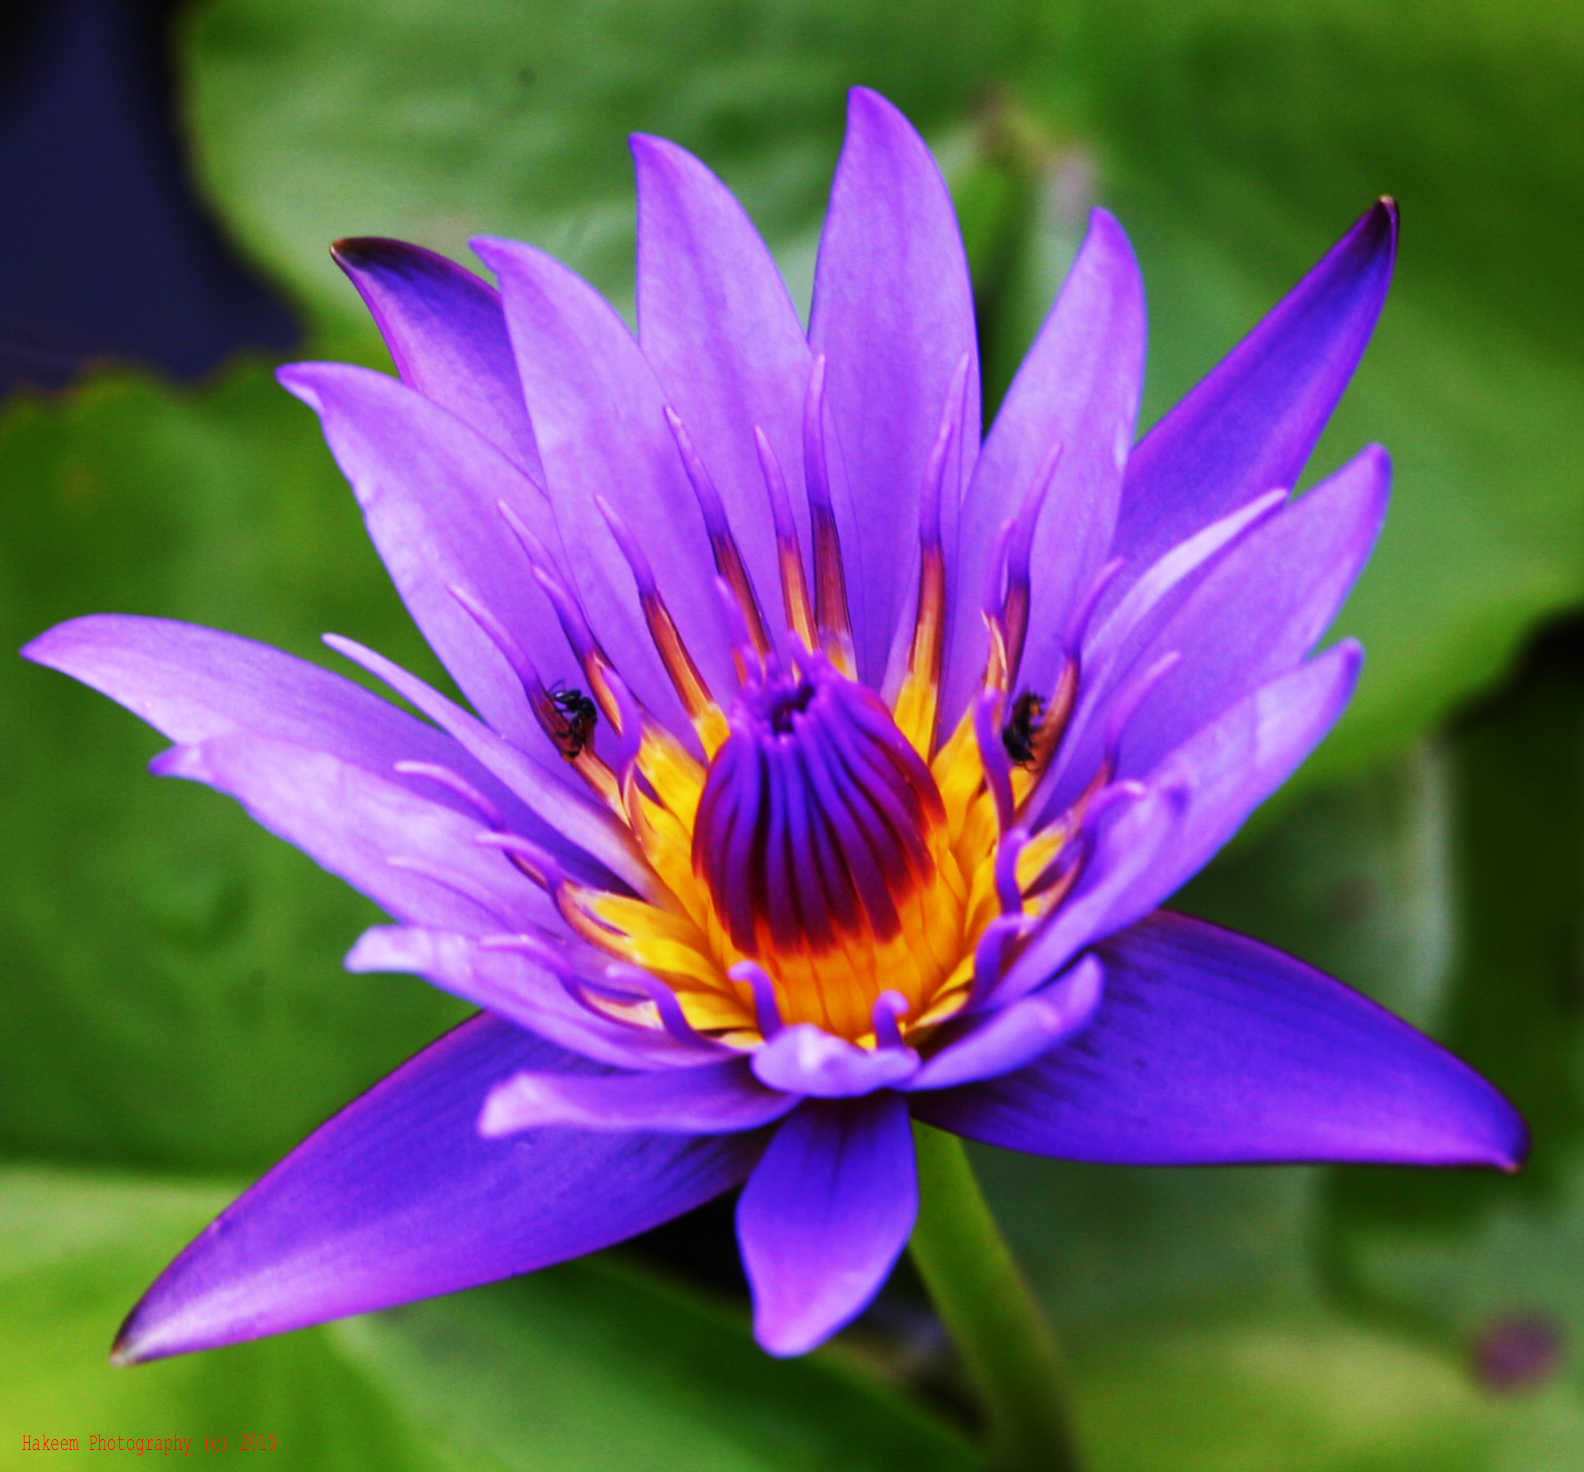 Hakeem Photography: lotus with purple flowers